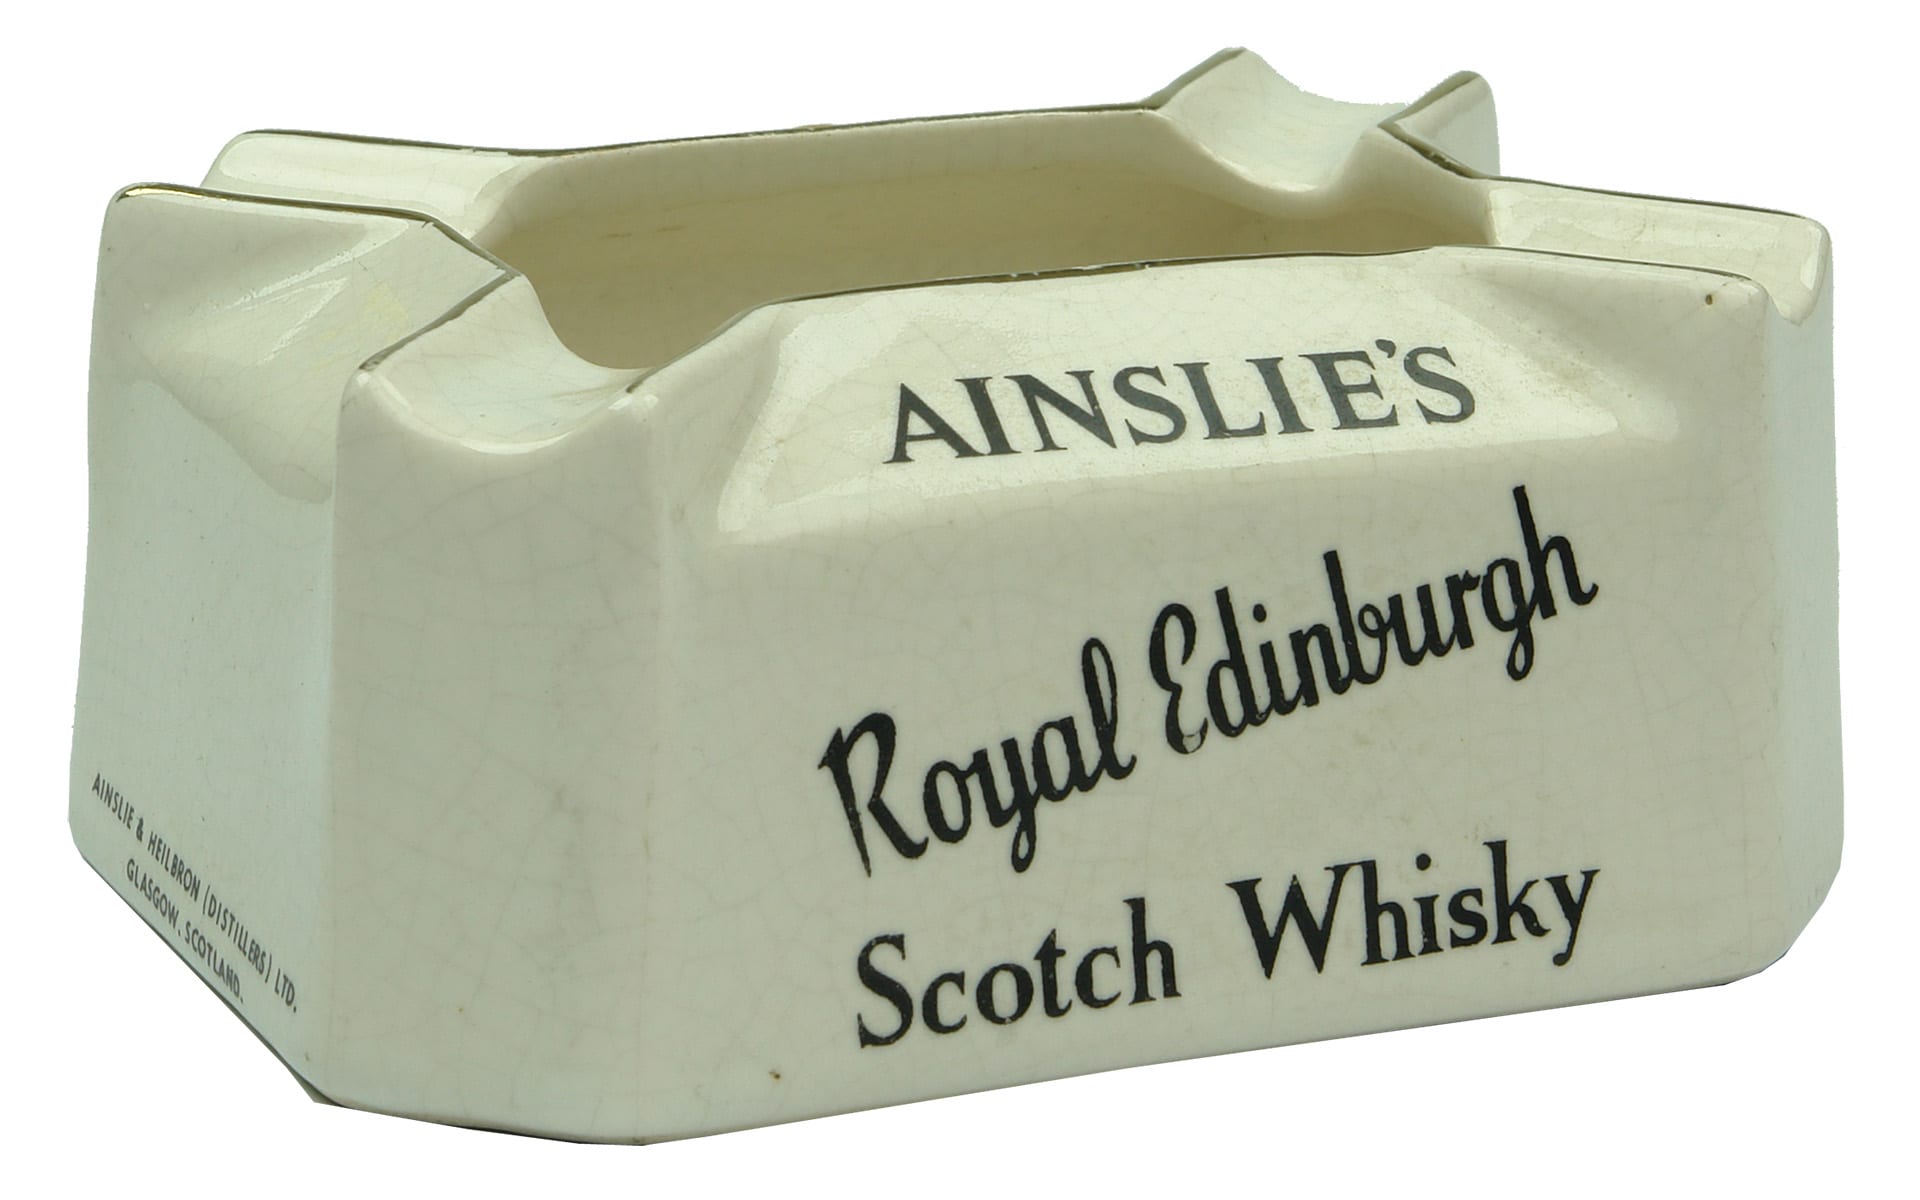 Ainslie's Royal Edinburgh Scotch Whisky Advertising Ashtray